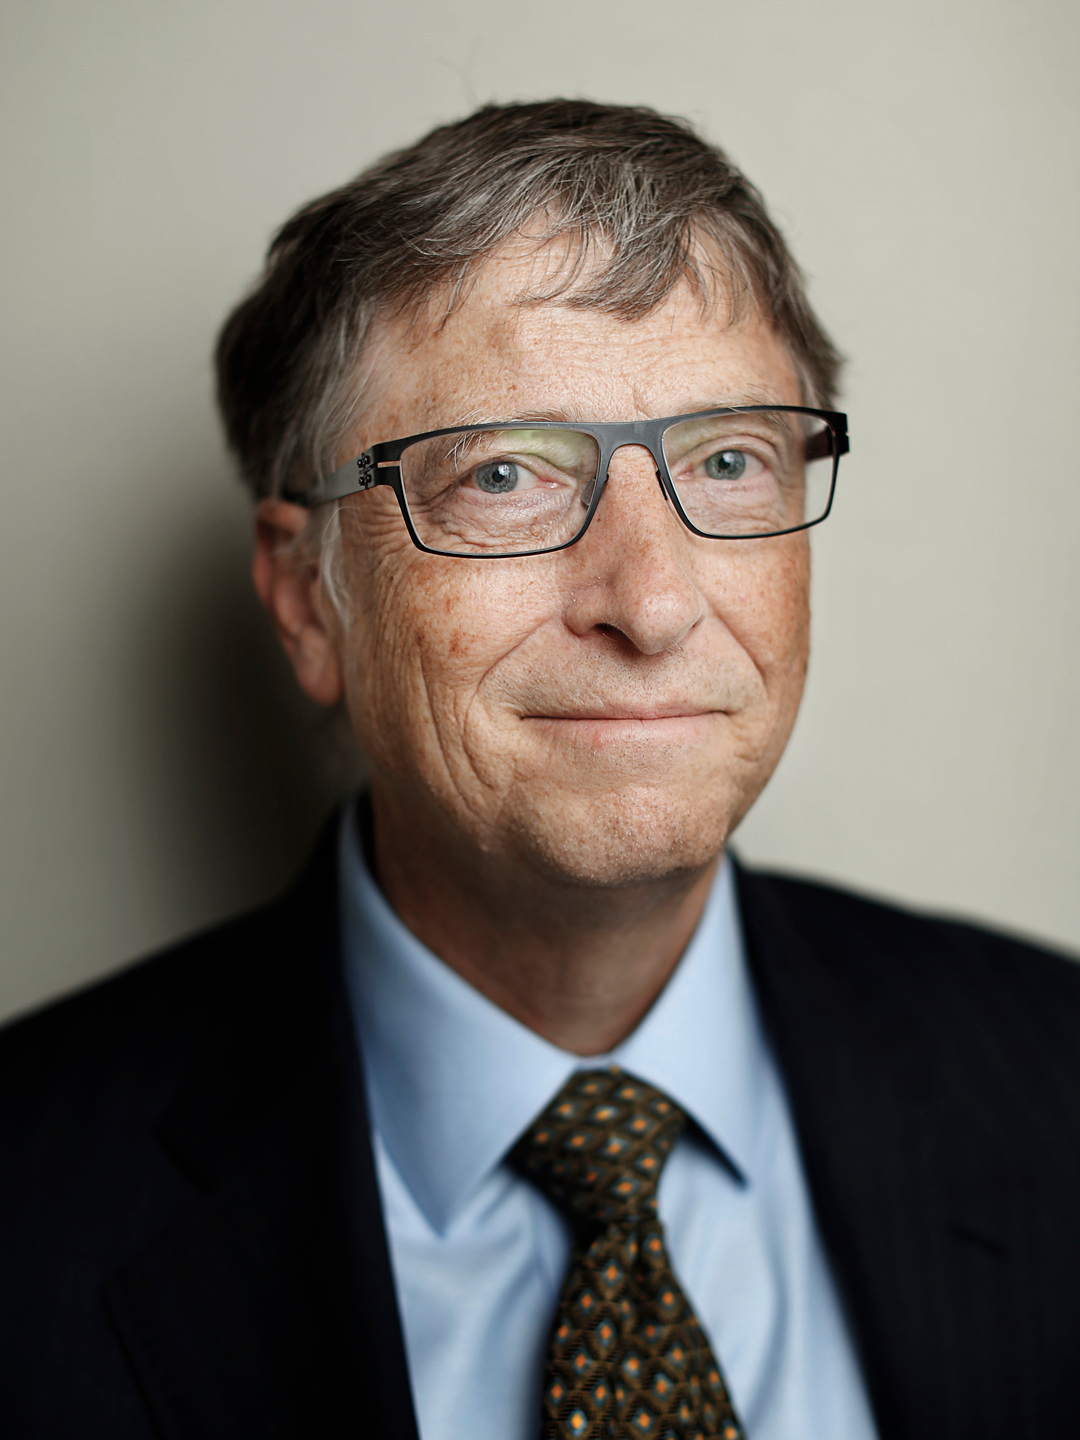 Bill Gates in his teens